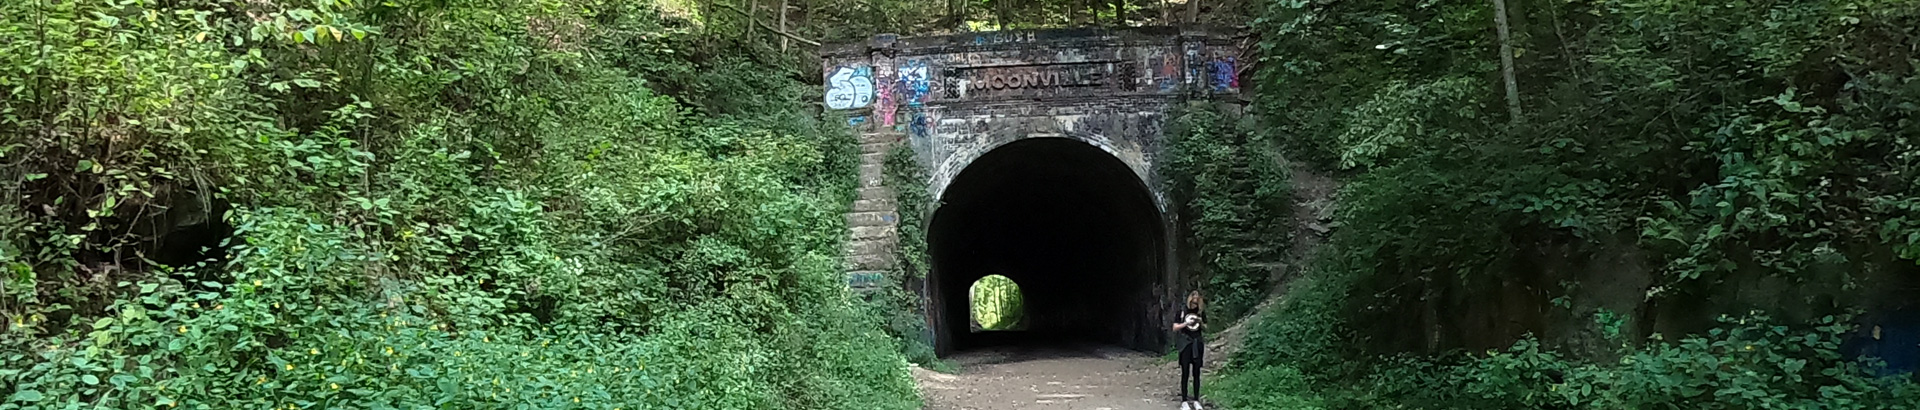 Moonville Tunnel.